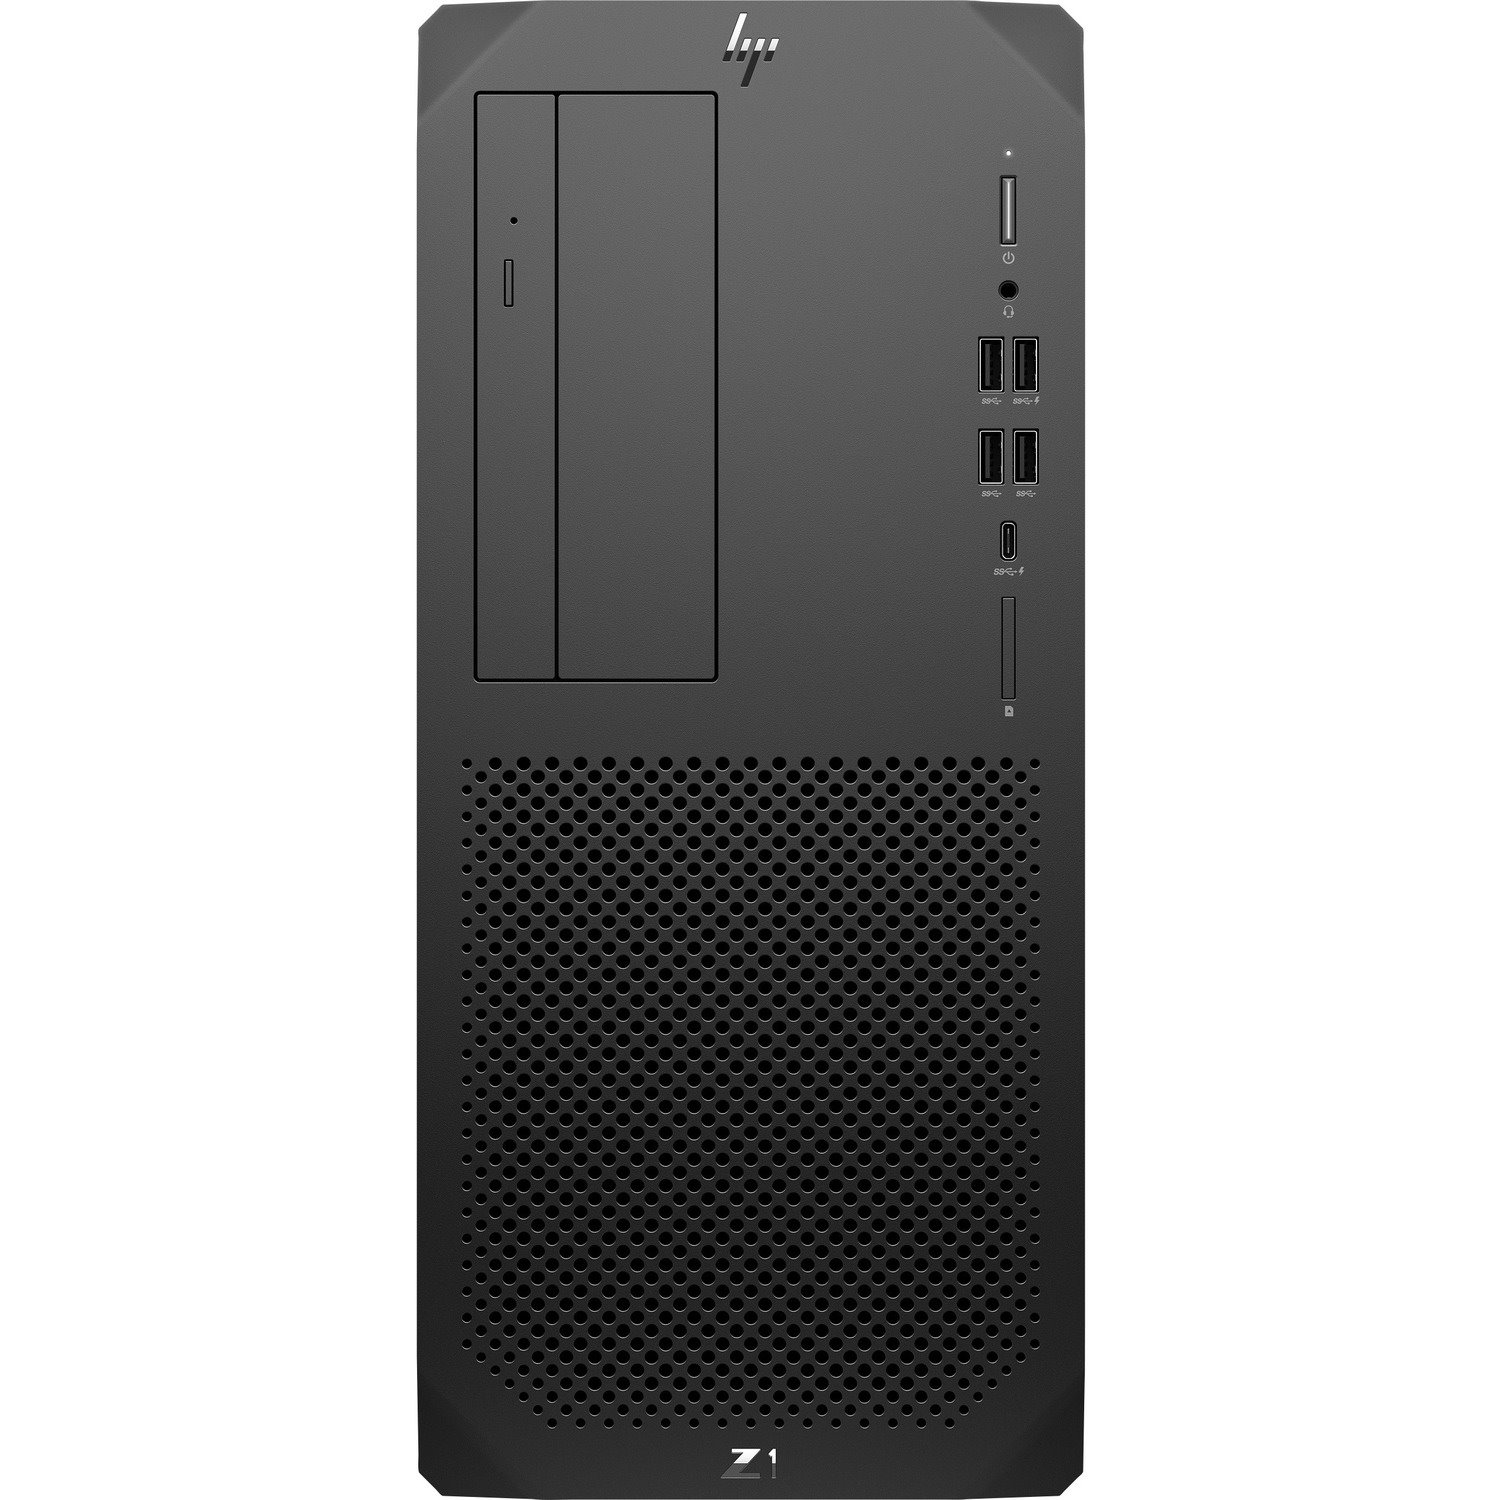 HP Z1 G6 Workstation - Intel Core i9 10th Gen i9-10900 - 32 GB - 2 TB HDD - 512 GB SSD - Tower